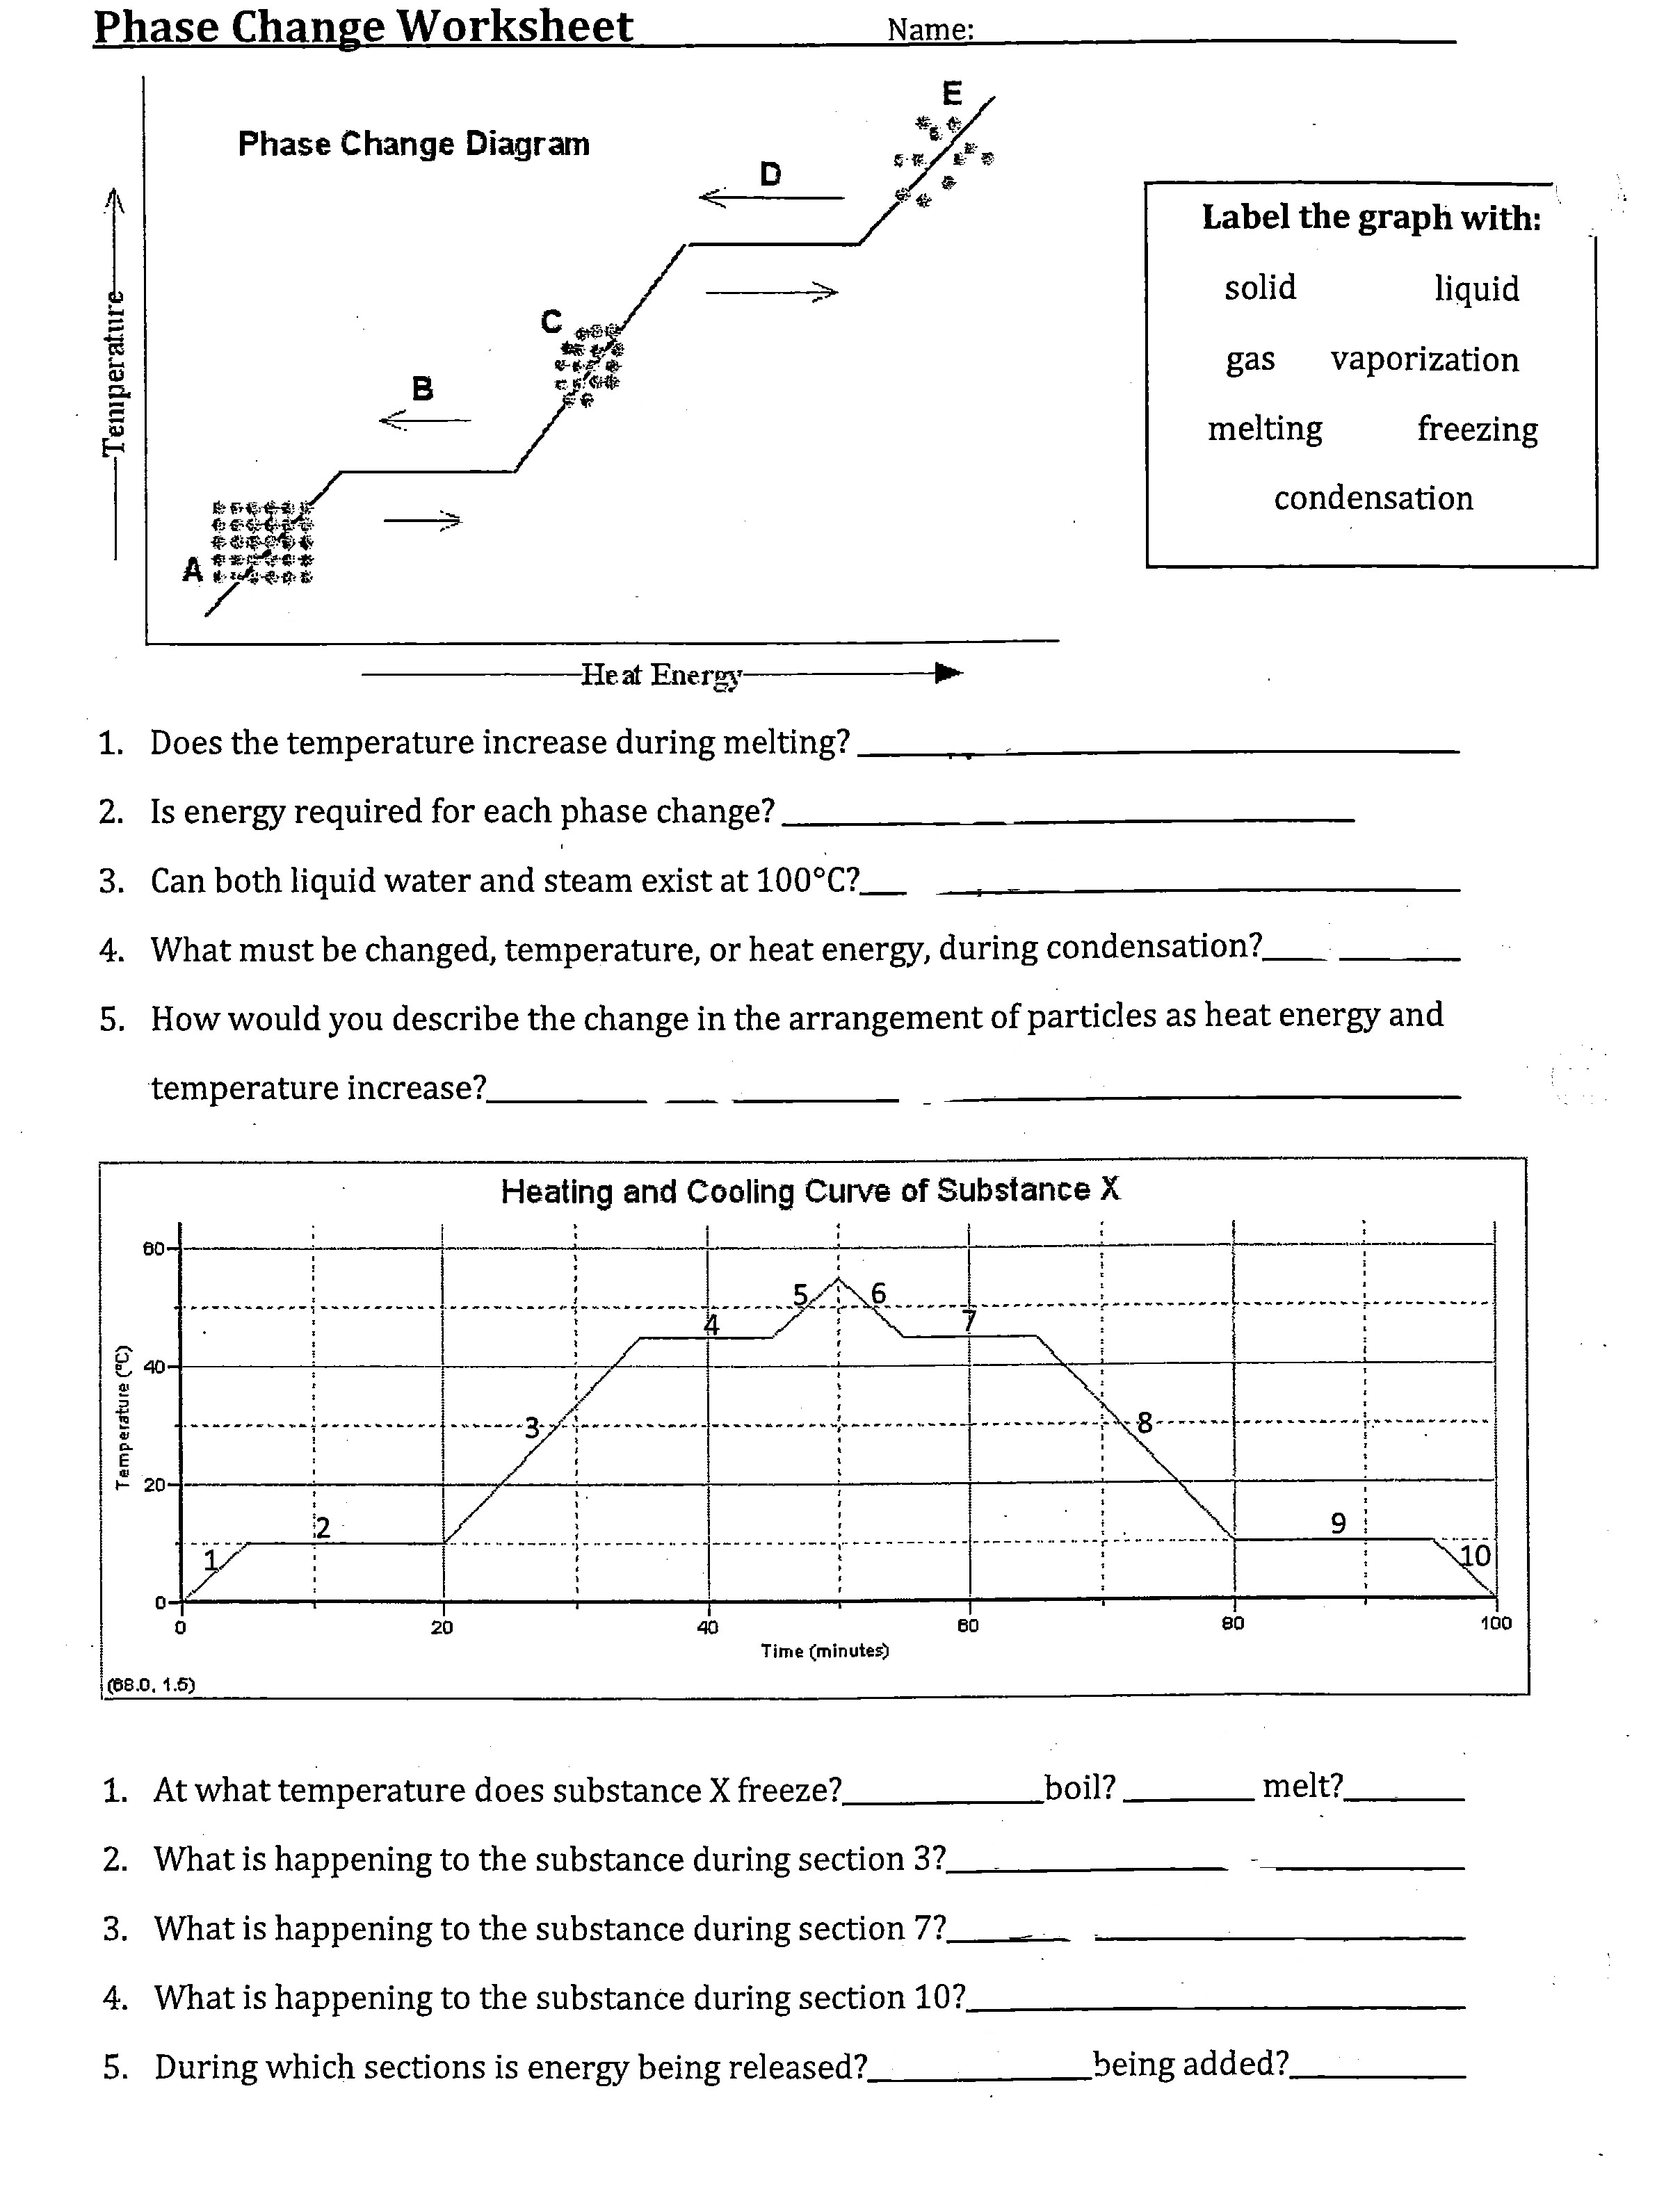 Phase Diagram Worksheet Answers